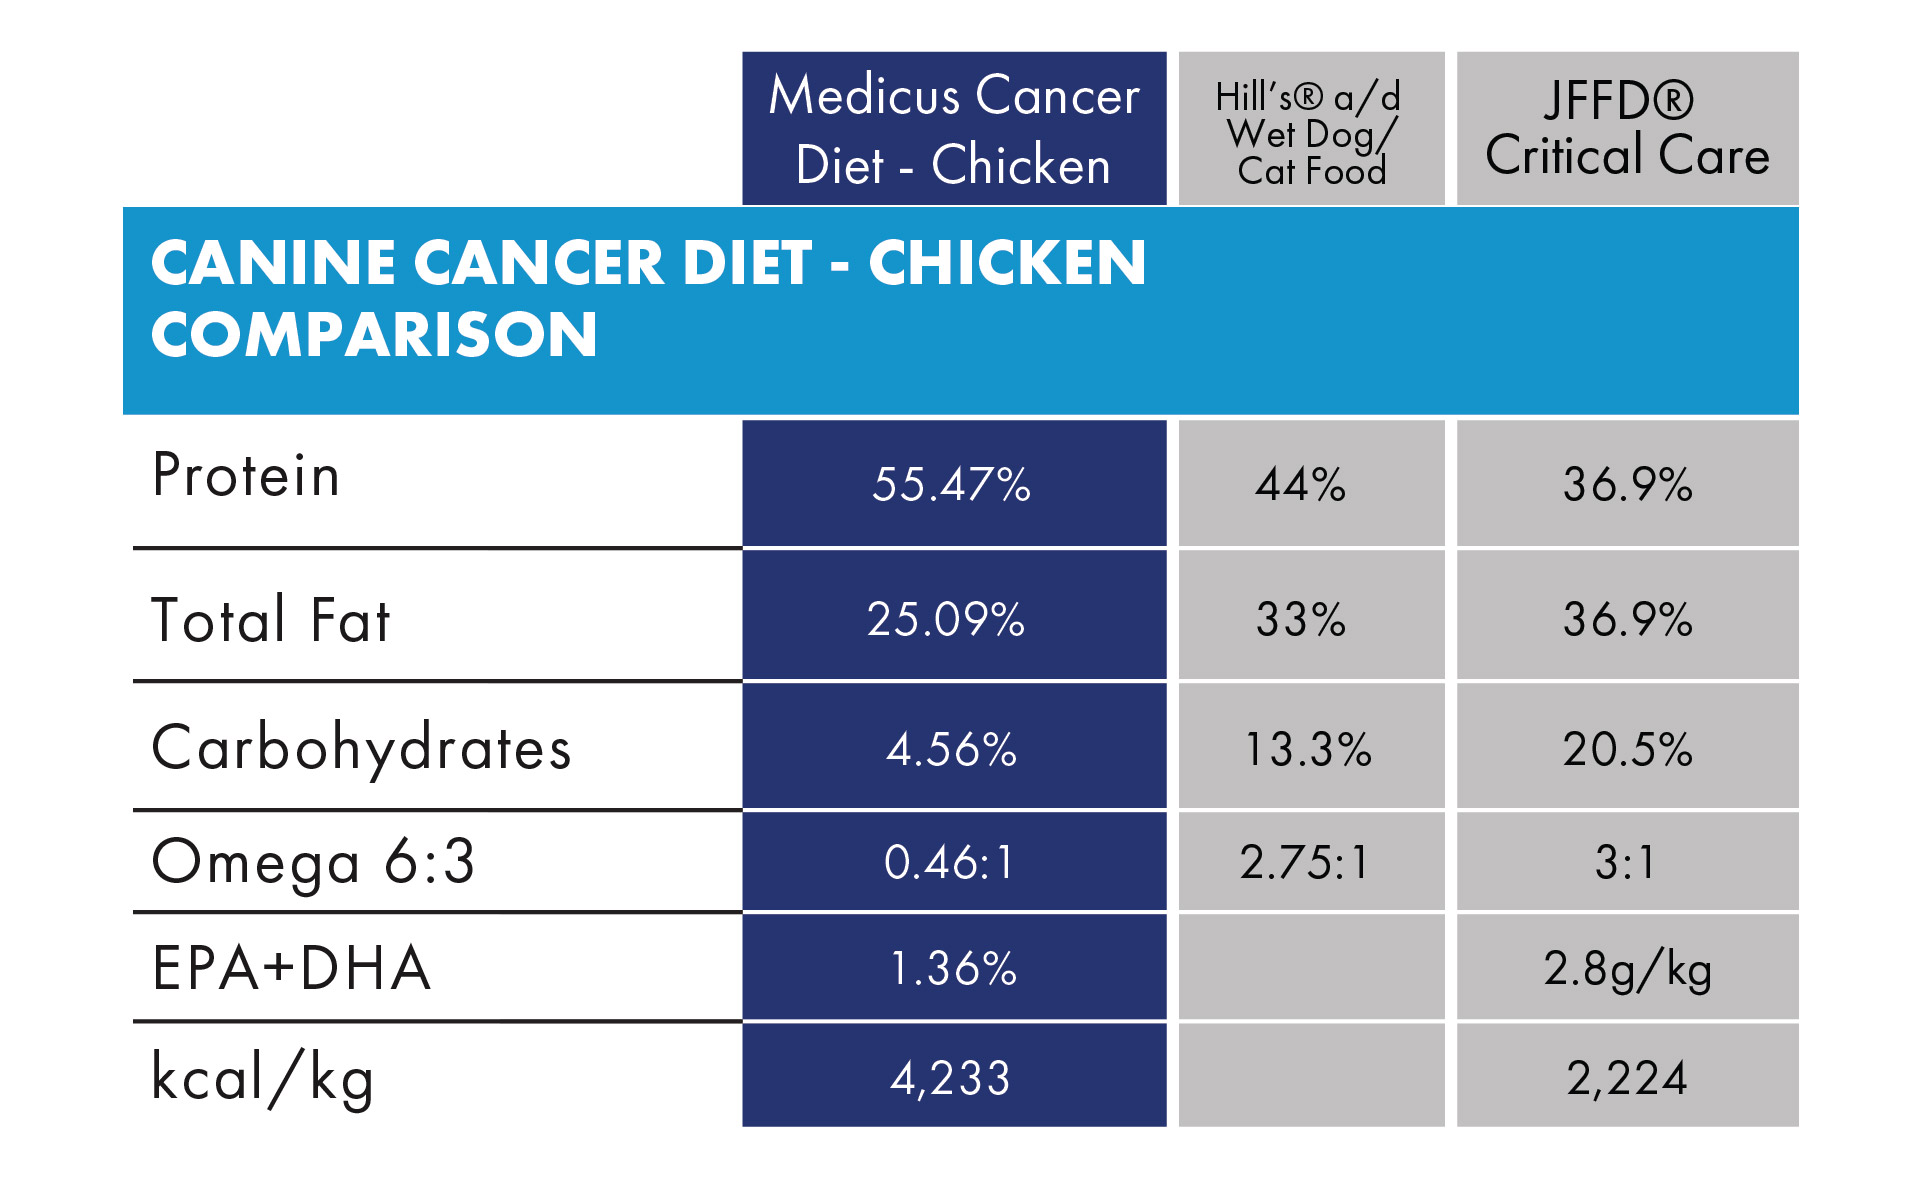 medicus charts_DOG Medicus Cancer Diet - Chicken